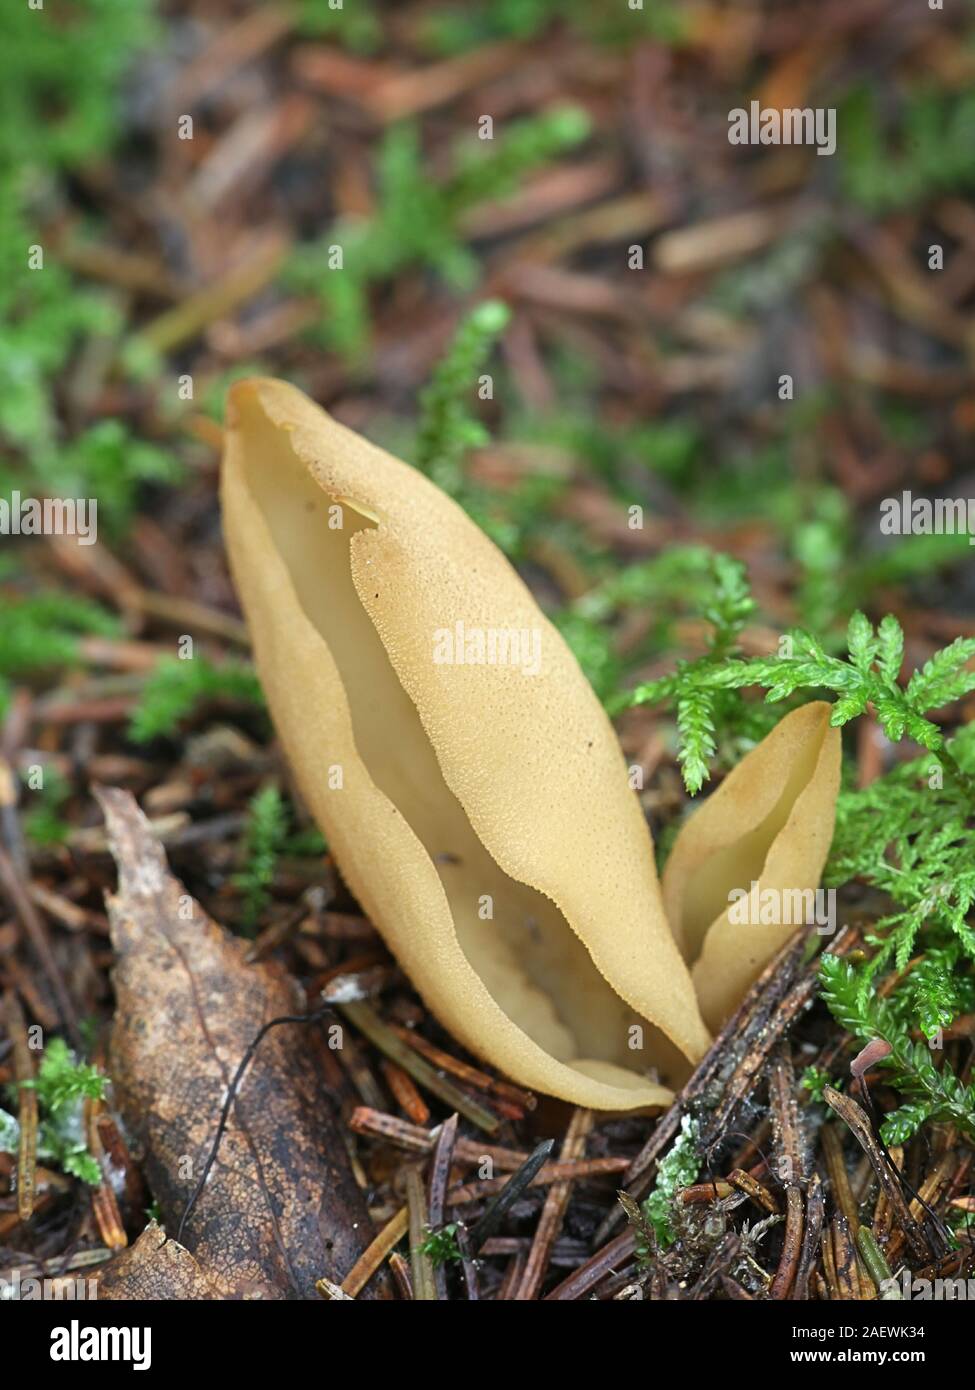 Otidea tuomikoskii, known as a Split goblet or rabbit ear fungus, growing wild in Finland Stock Photo